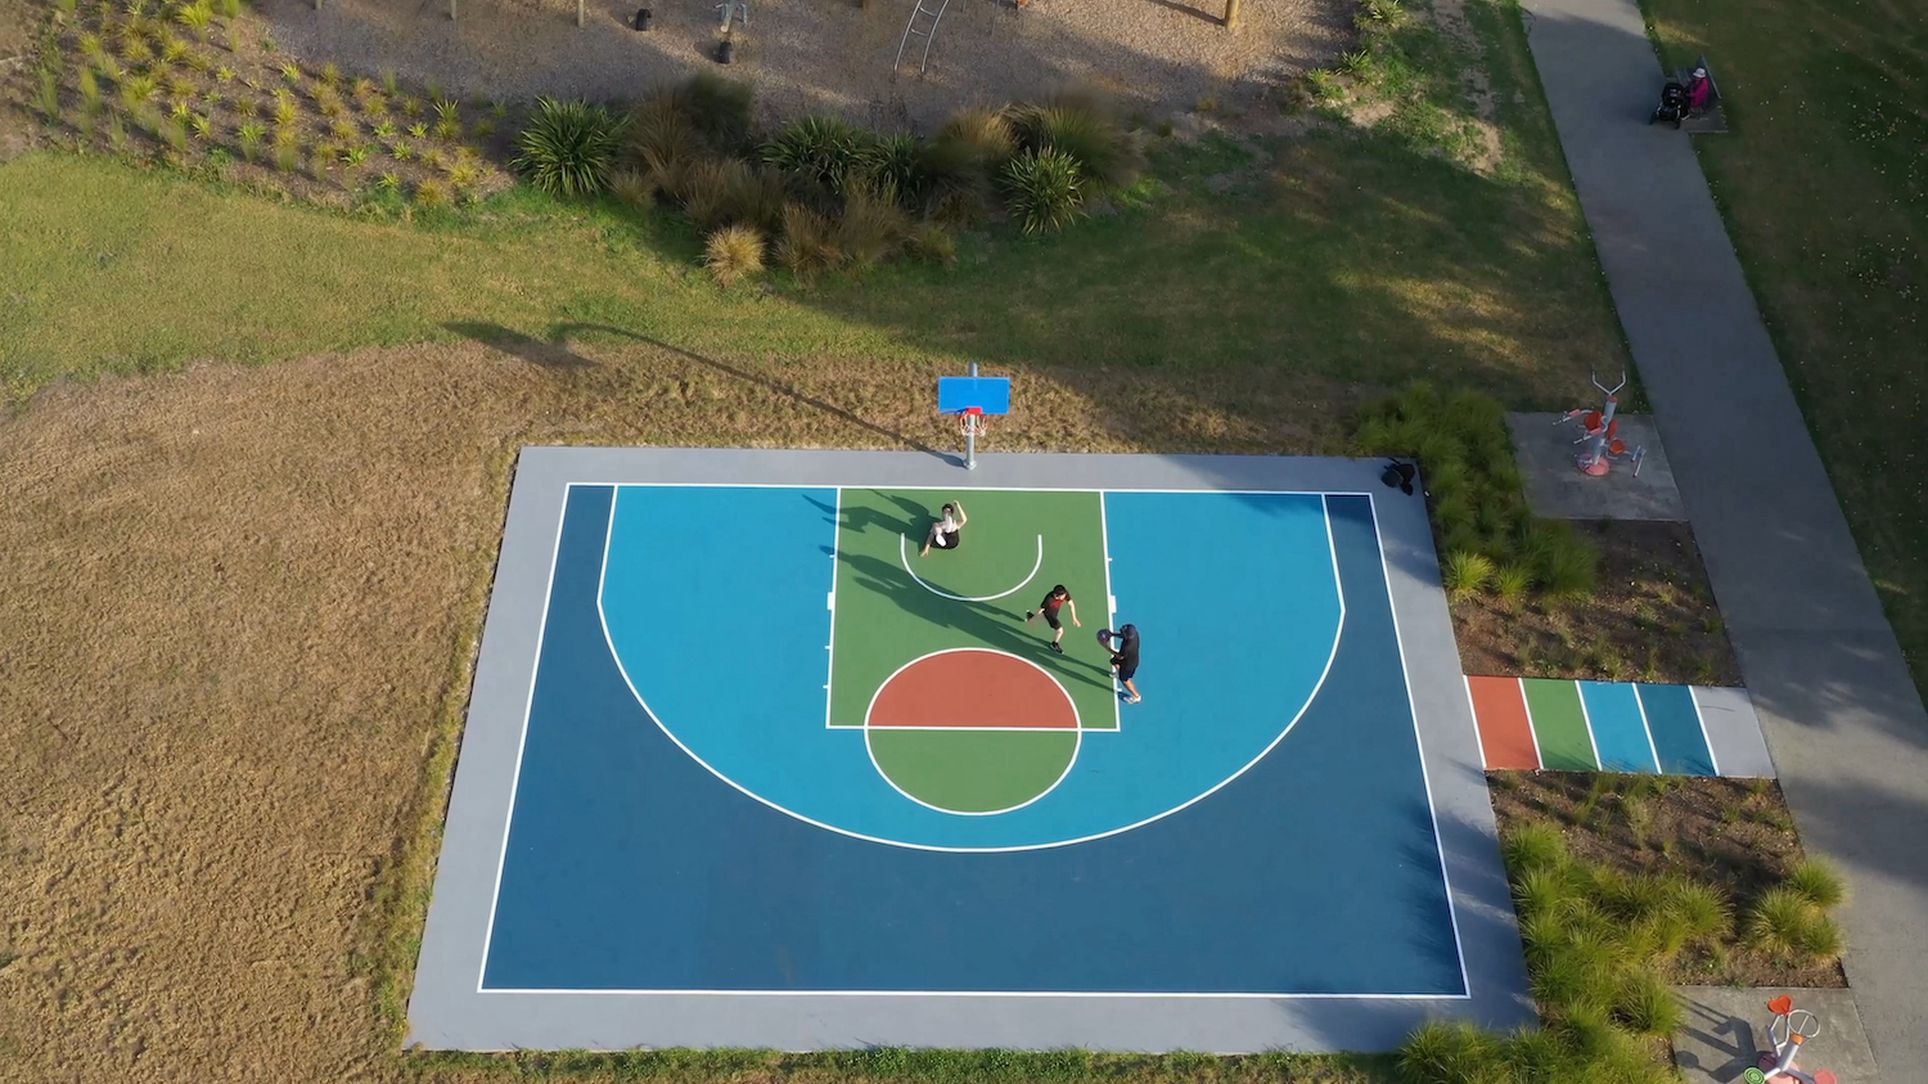 FIBA 3X3 Basketball Court, Unsworth Reserve